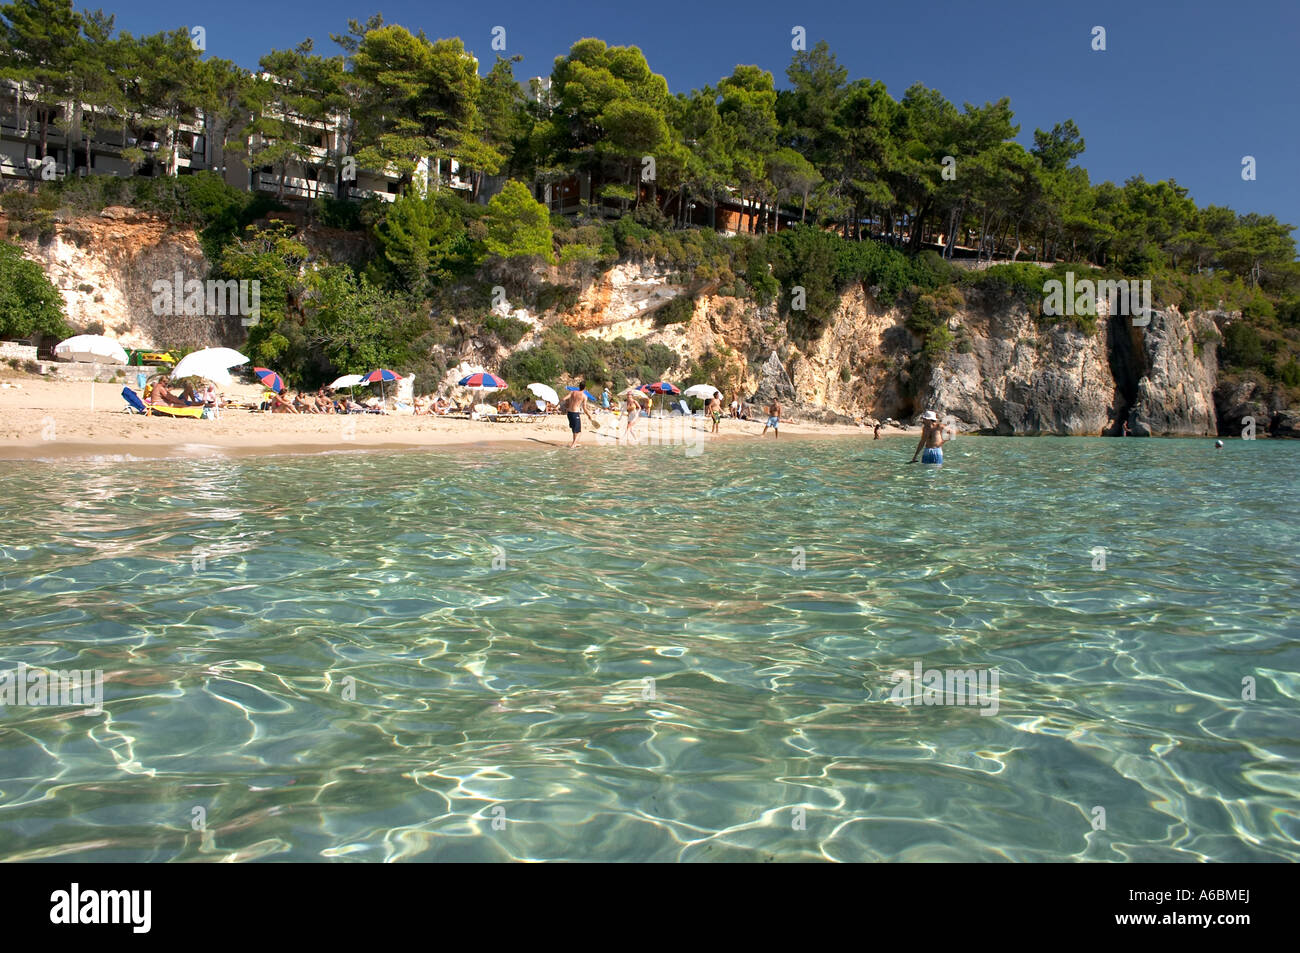 Cefallonia, Platys gyalos beach, Ionian sea, Greece Stock Photo